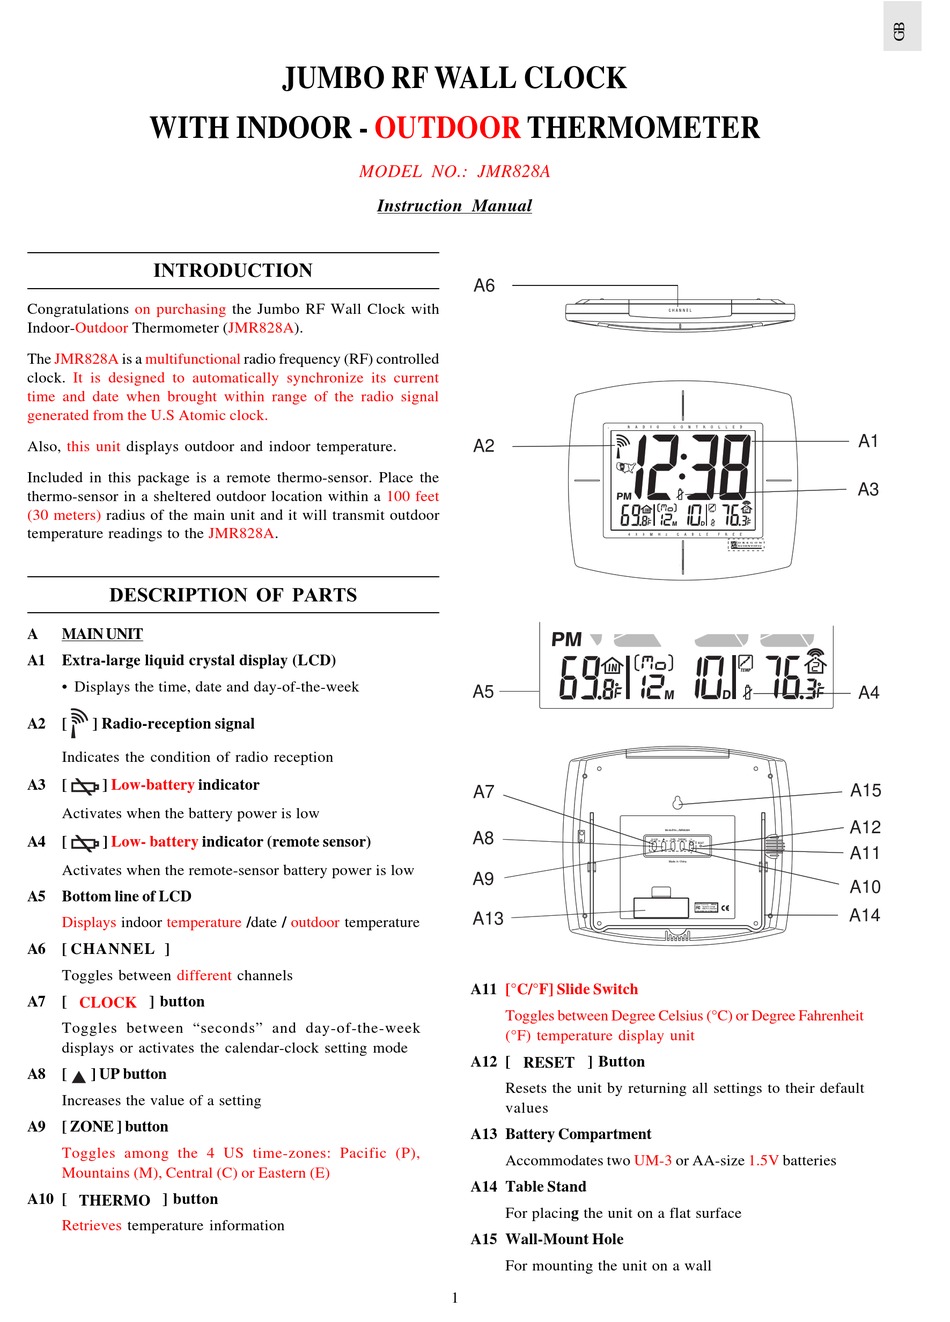 OREGON SCIENTIFIC JUMBO JMR828A MANUAL Pdf Download | ManualsLib